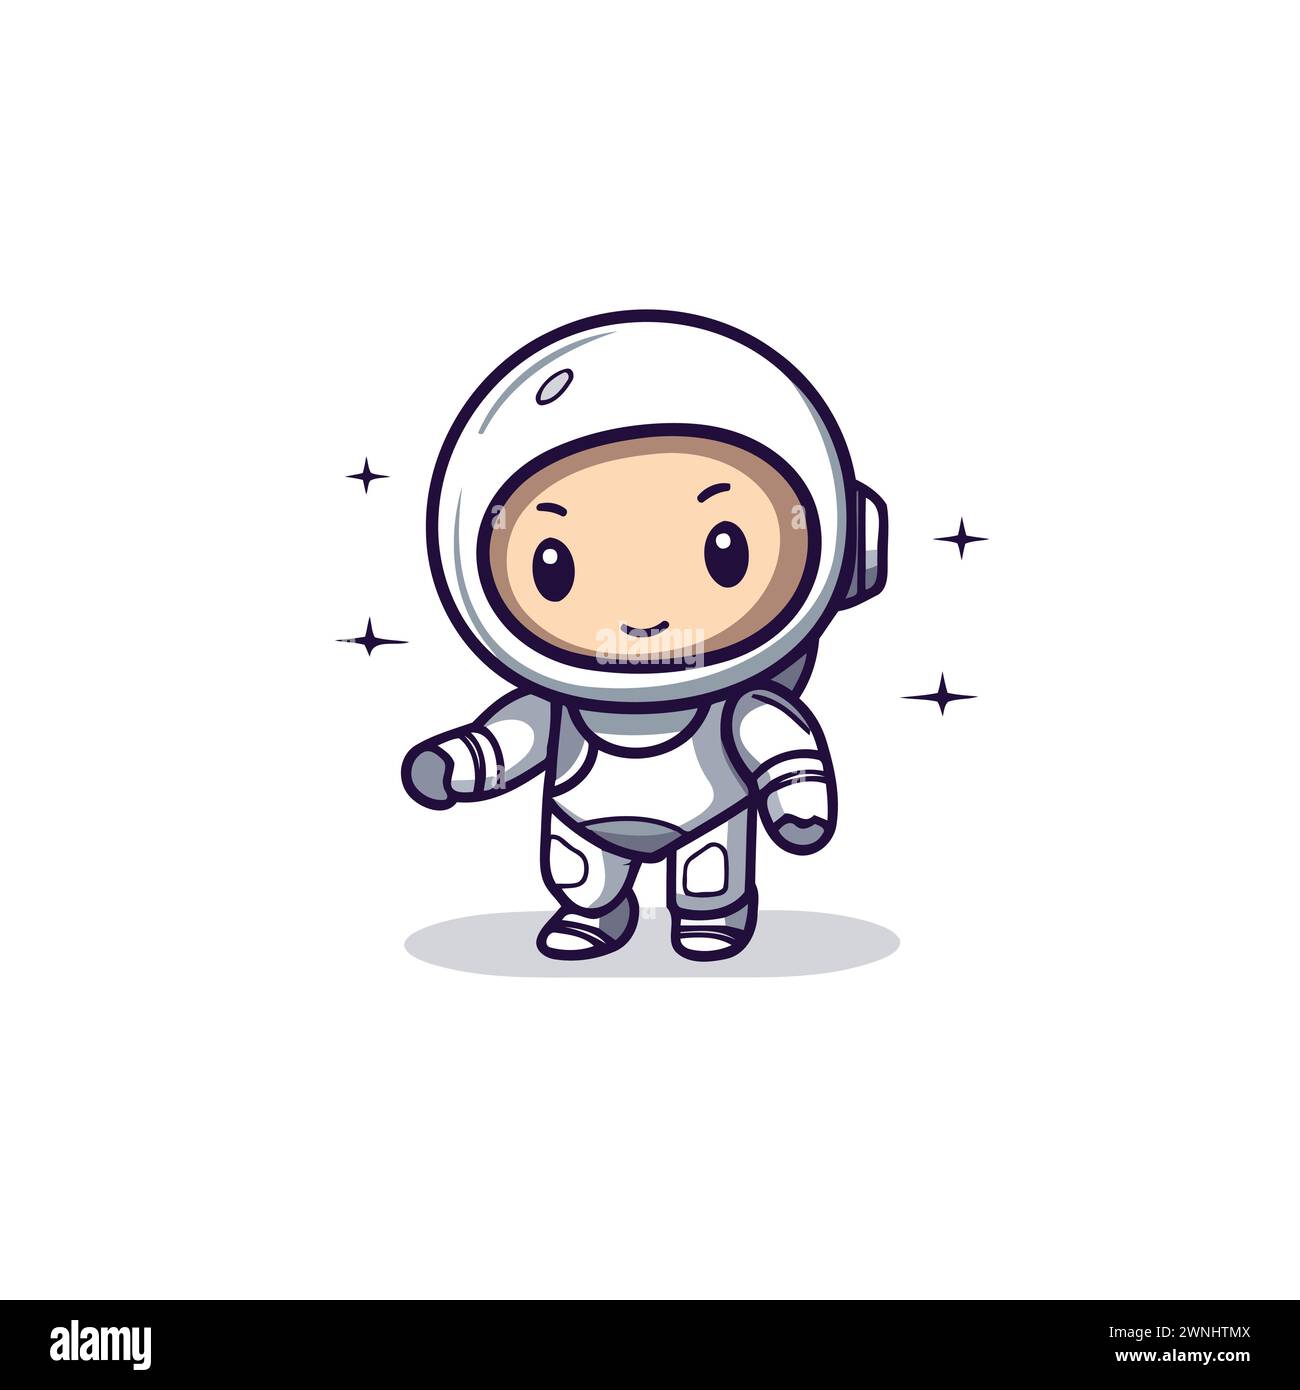 Cute astronaut with space suit. Cute cartoon vector illustration. Stock Vector